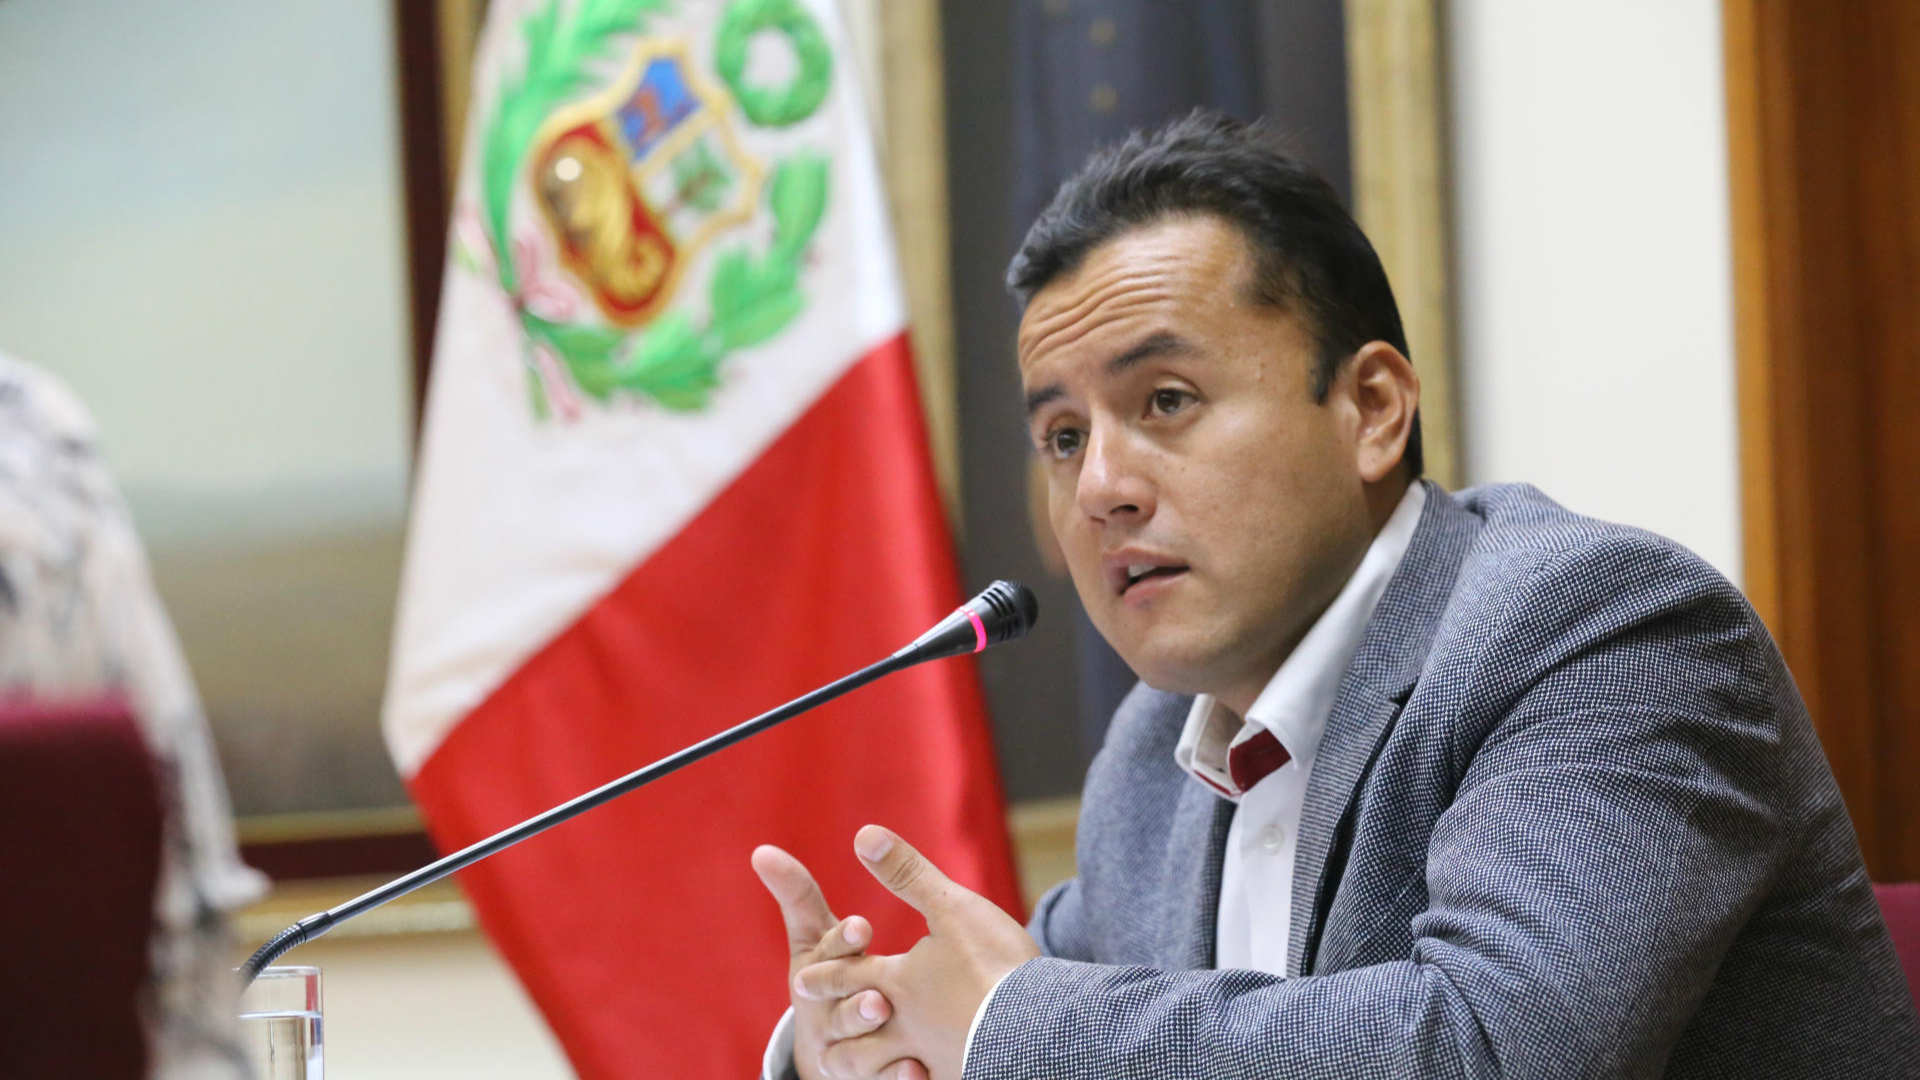 Extrabajadora de Richard Acuña lo expone ante Rodrigo González: “Él le fue infiel a Camila”